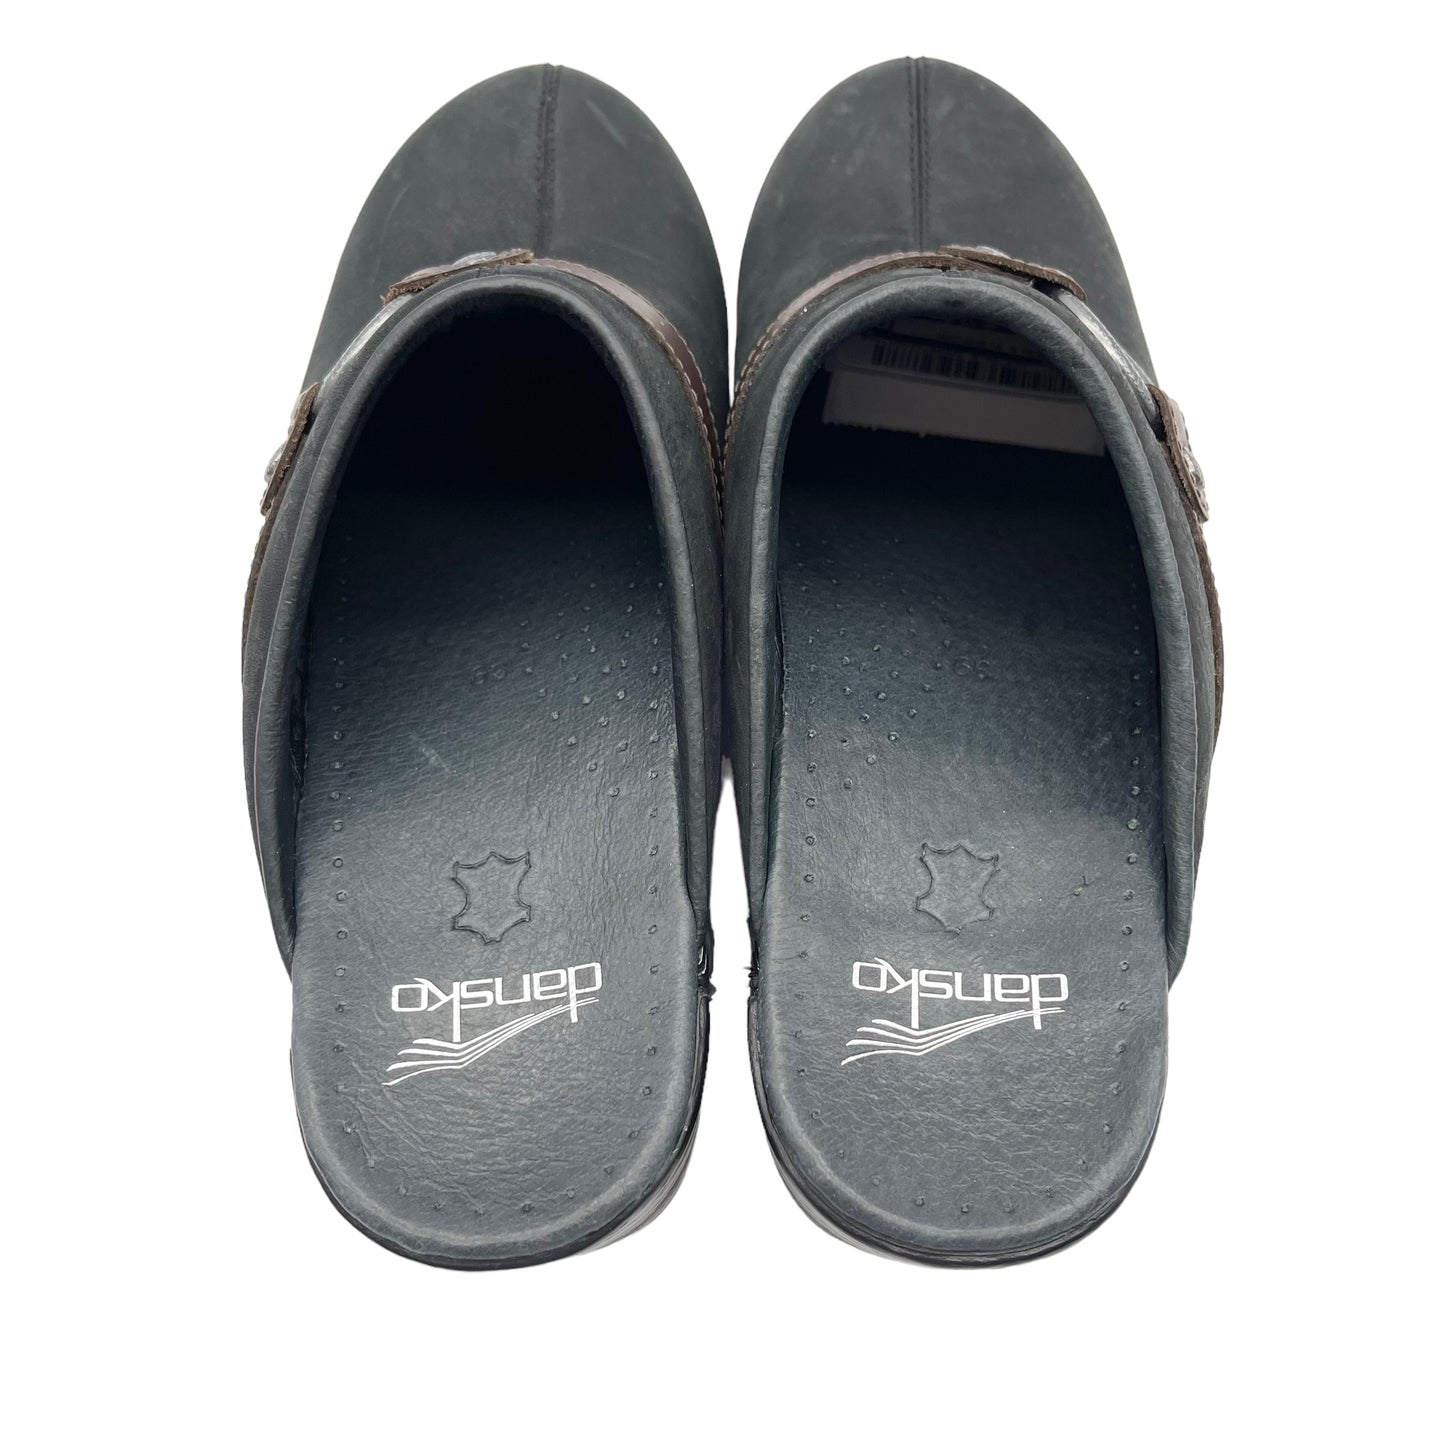 Shoes Heels Platform By Dansko  Size: 8.5 | 39